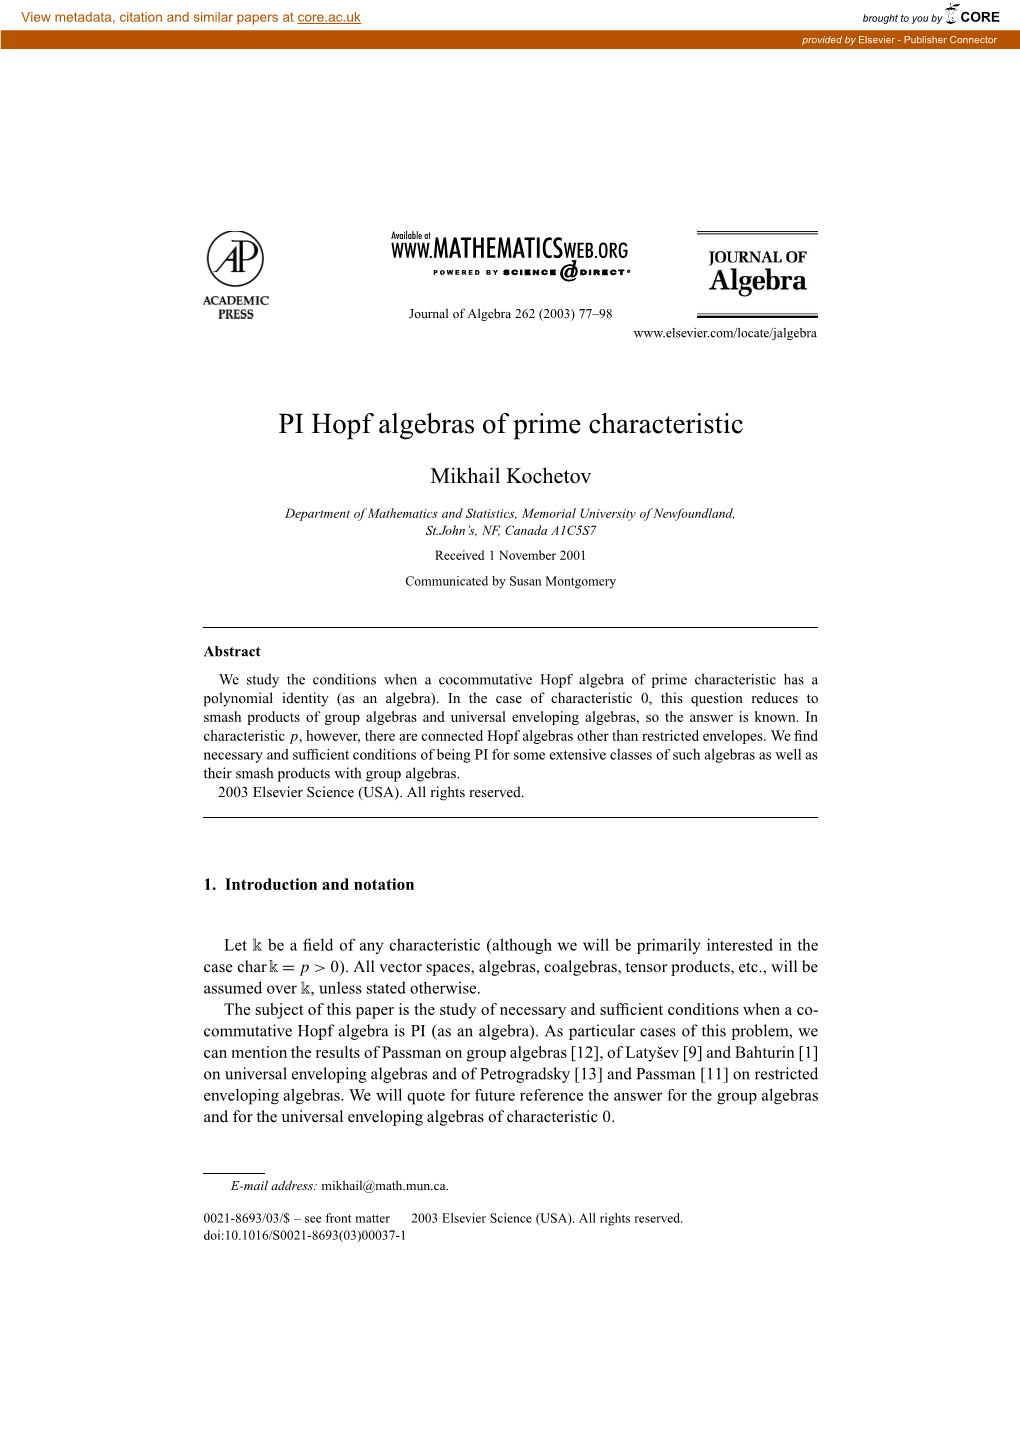 PI Hopf Algebras of Prime Characteristic